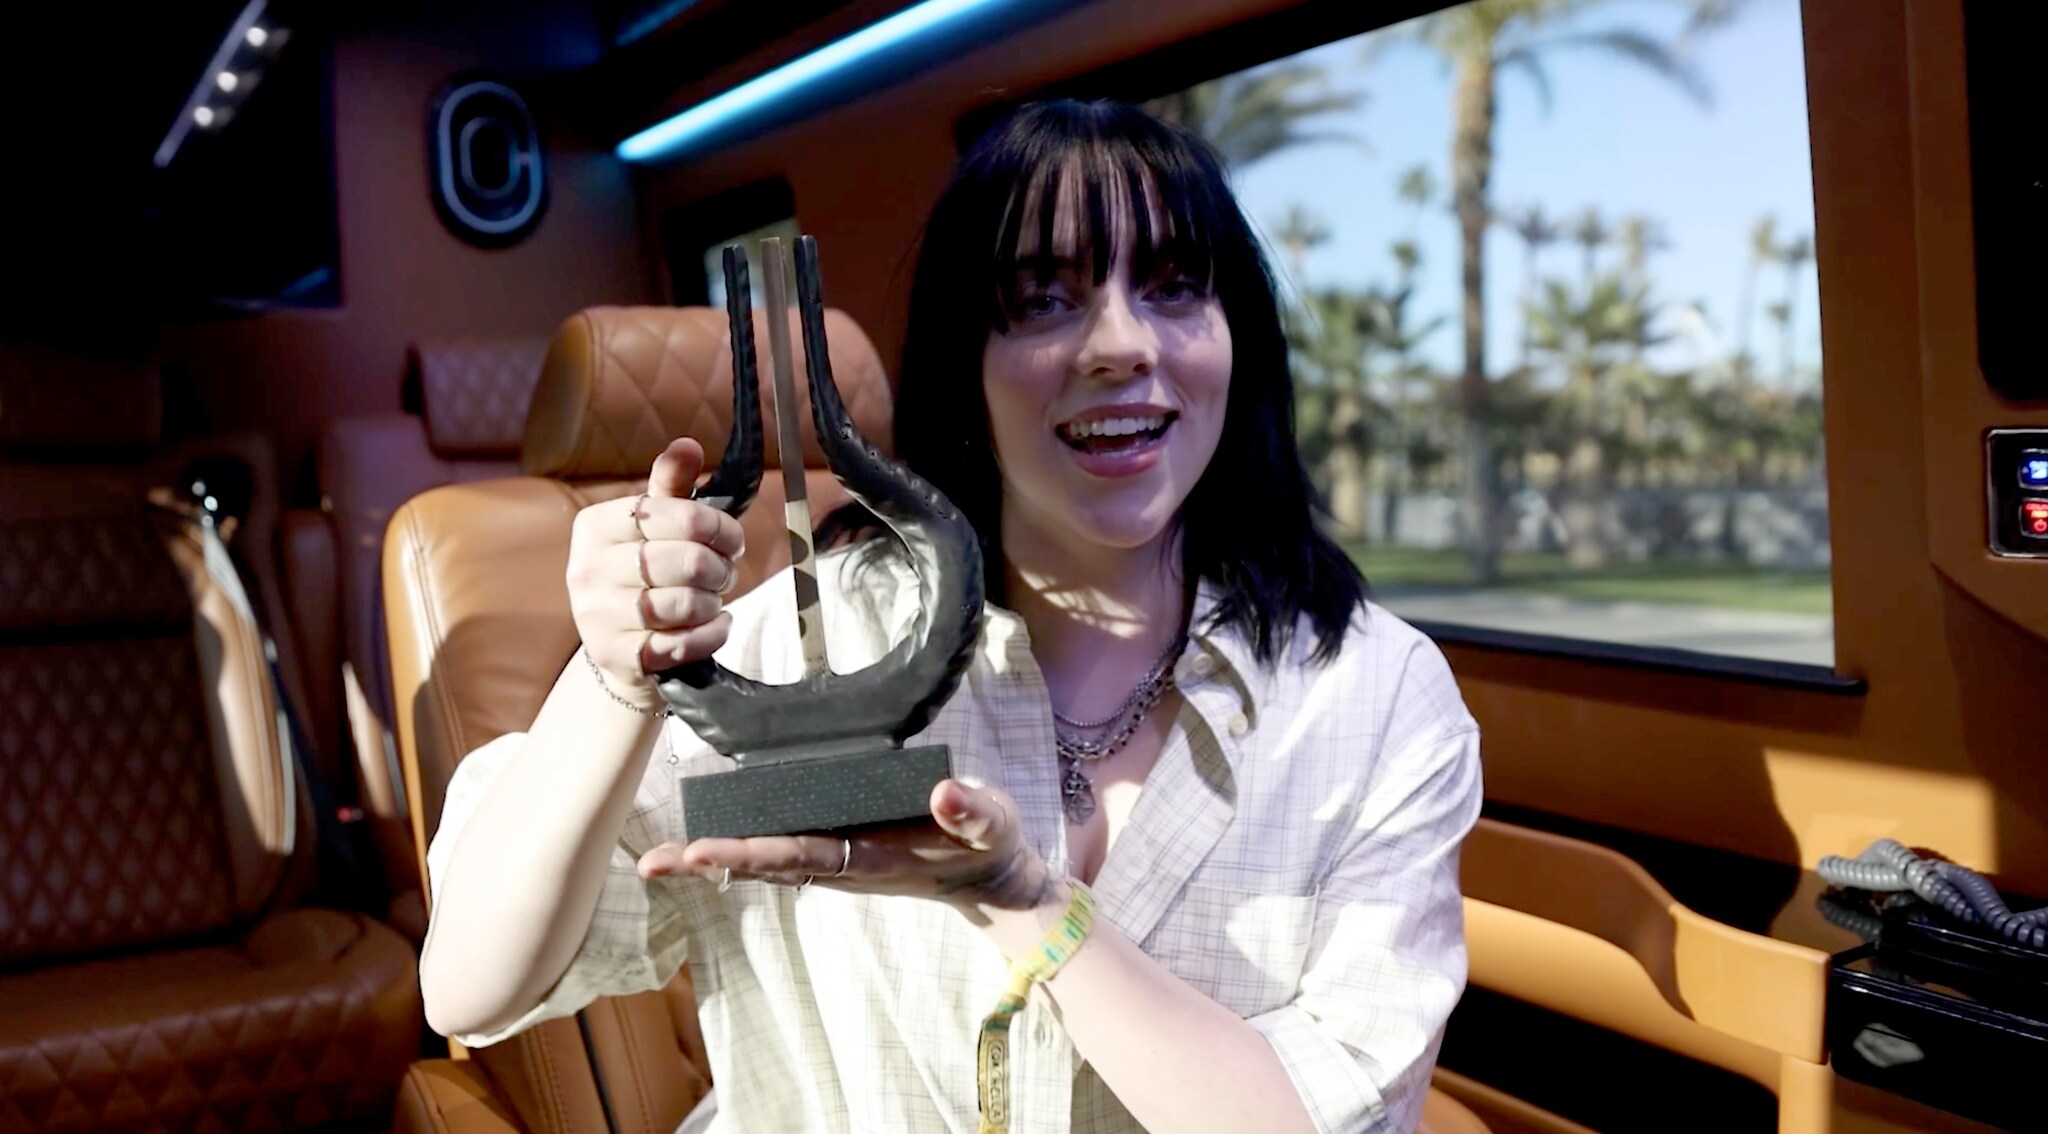 Girl In Red ha ricevuto quest’anno lo Spellemann Award – assegnato da Billie Eilish – VG